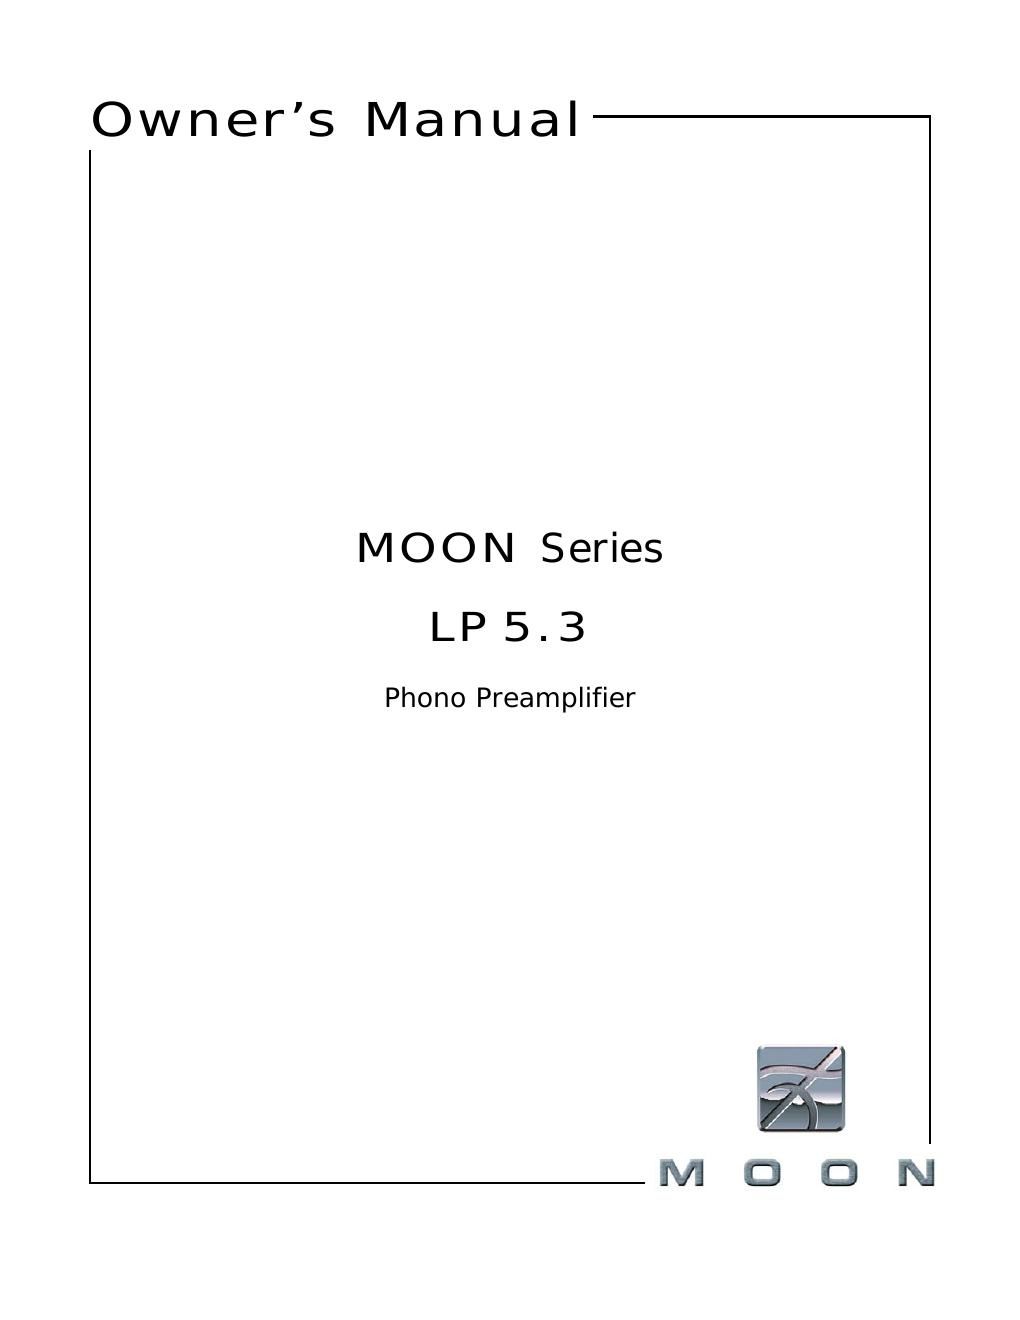 moon lp 5 3 owners manual